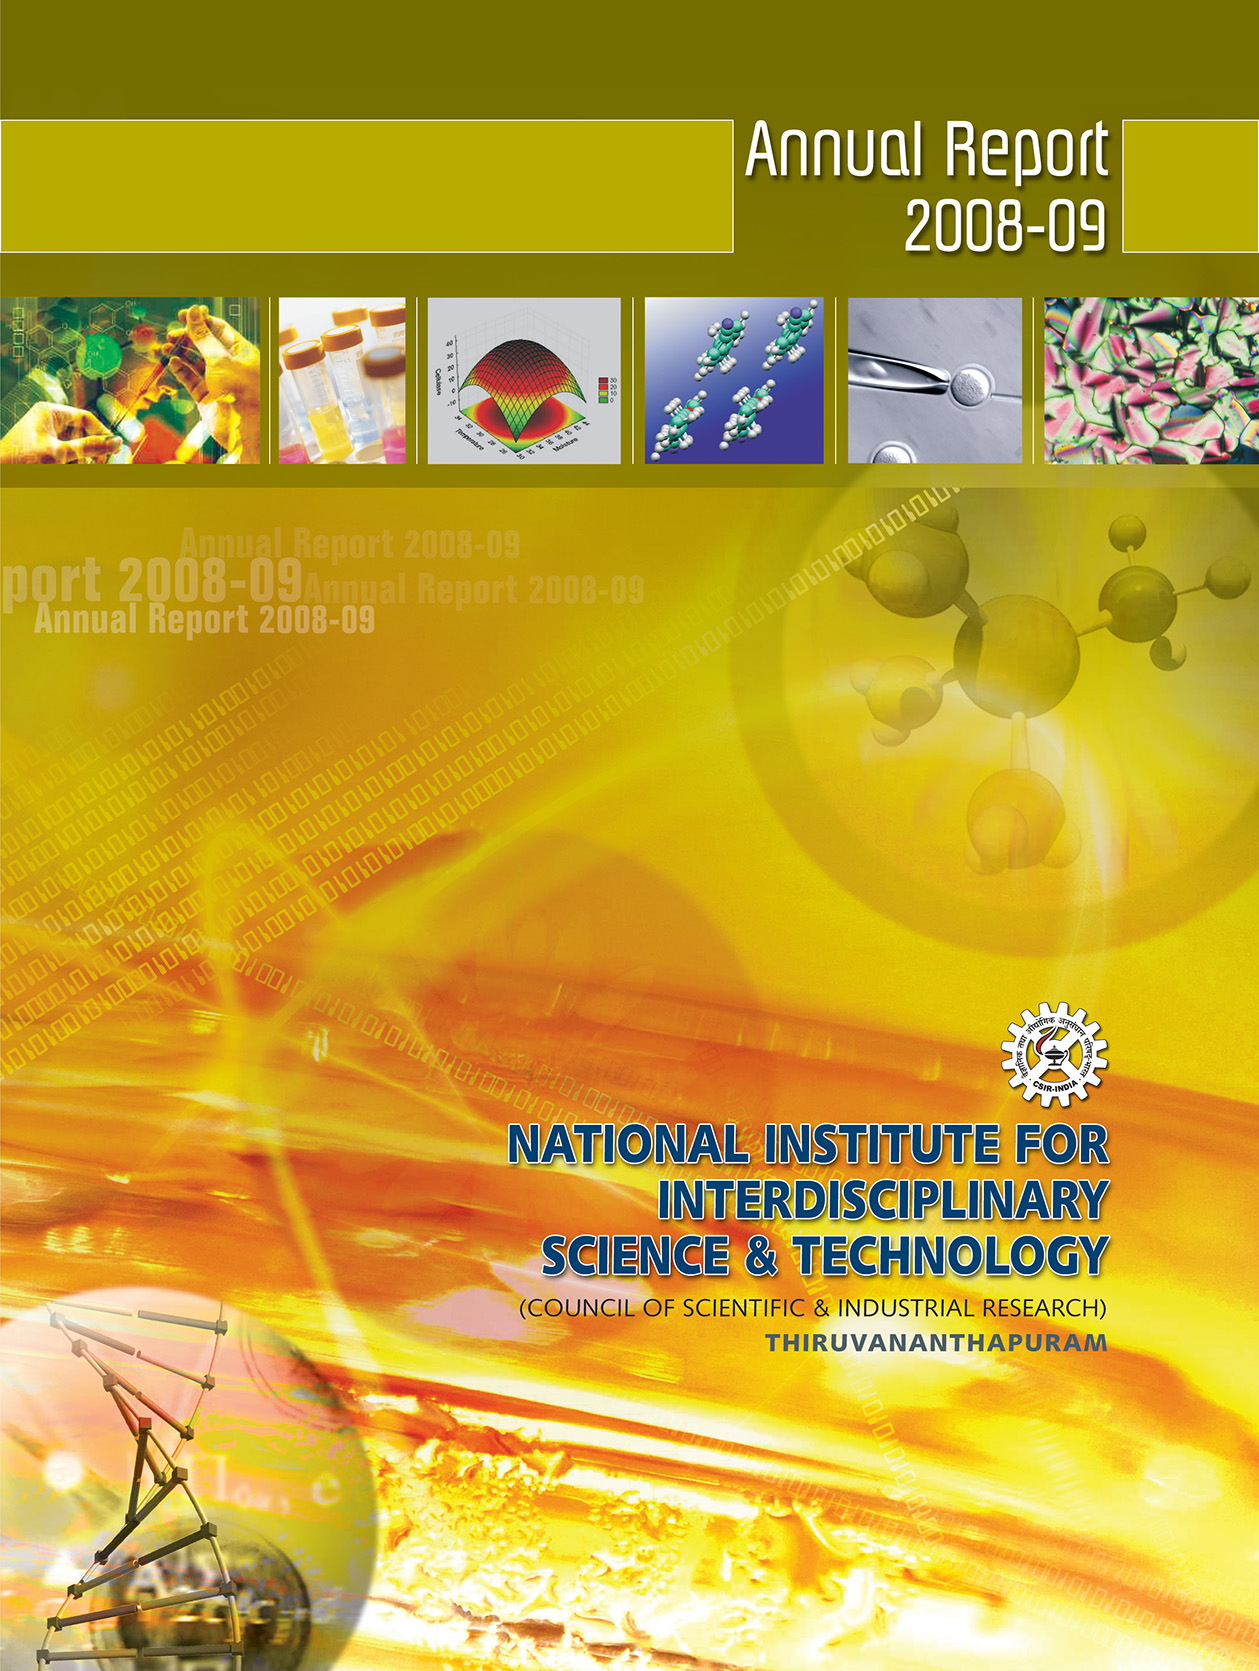 Annual Report 2008 - 2009